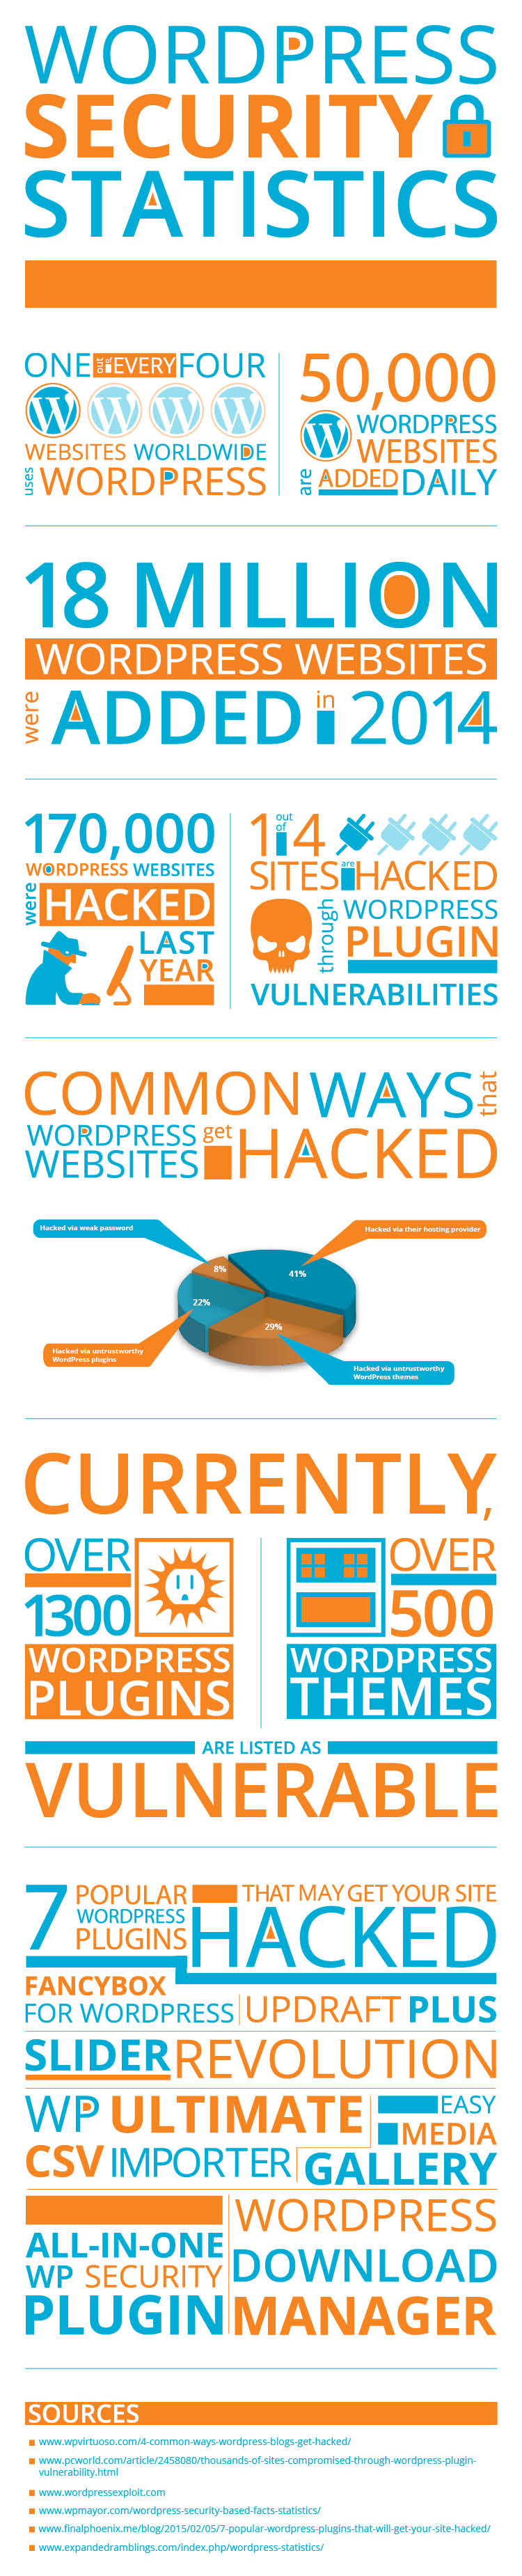 Wordpress security infographic